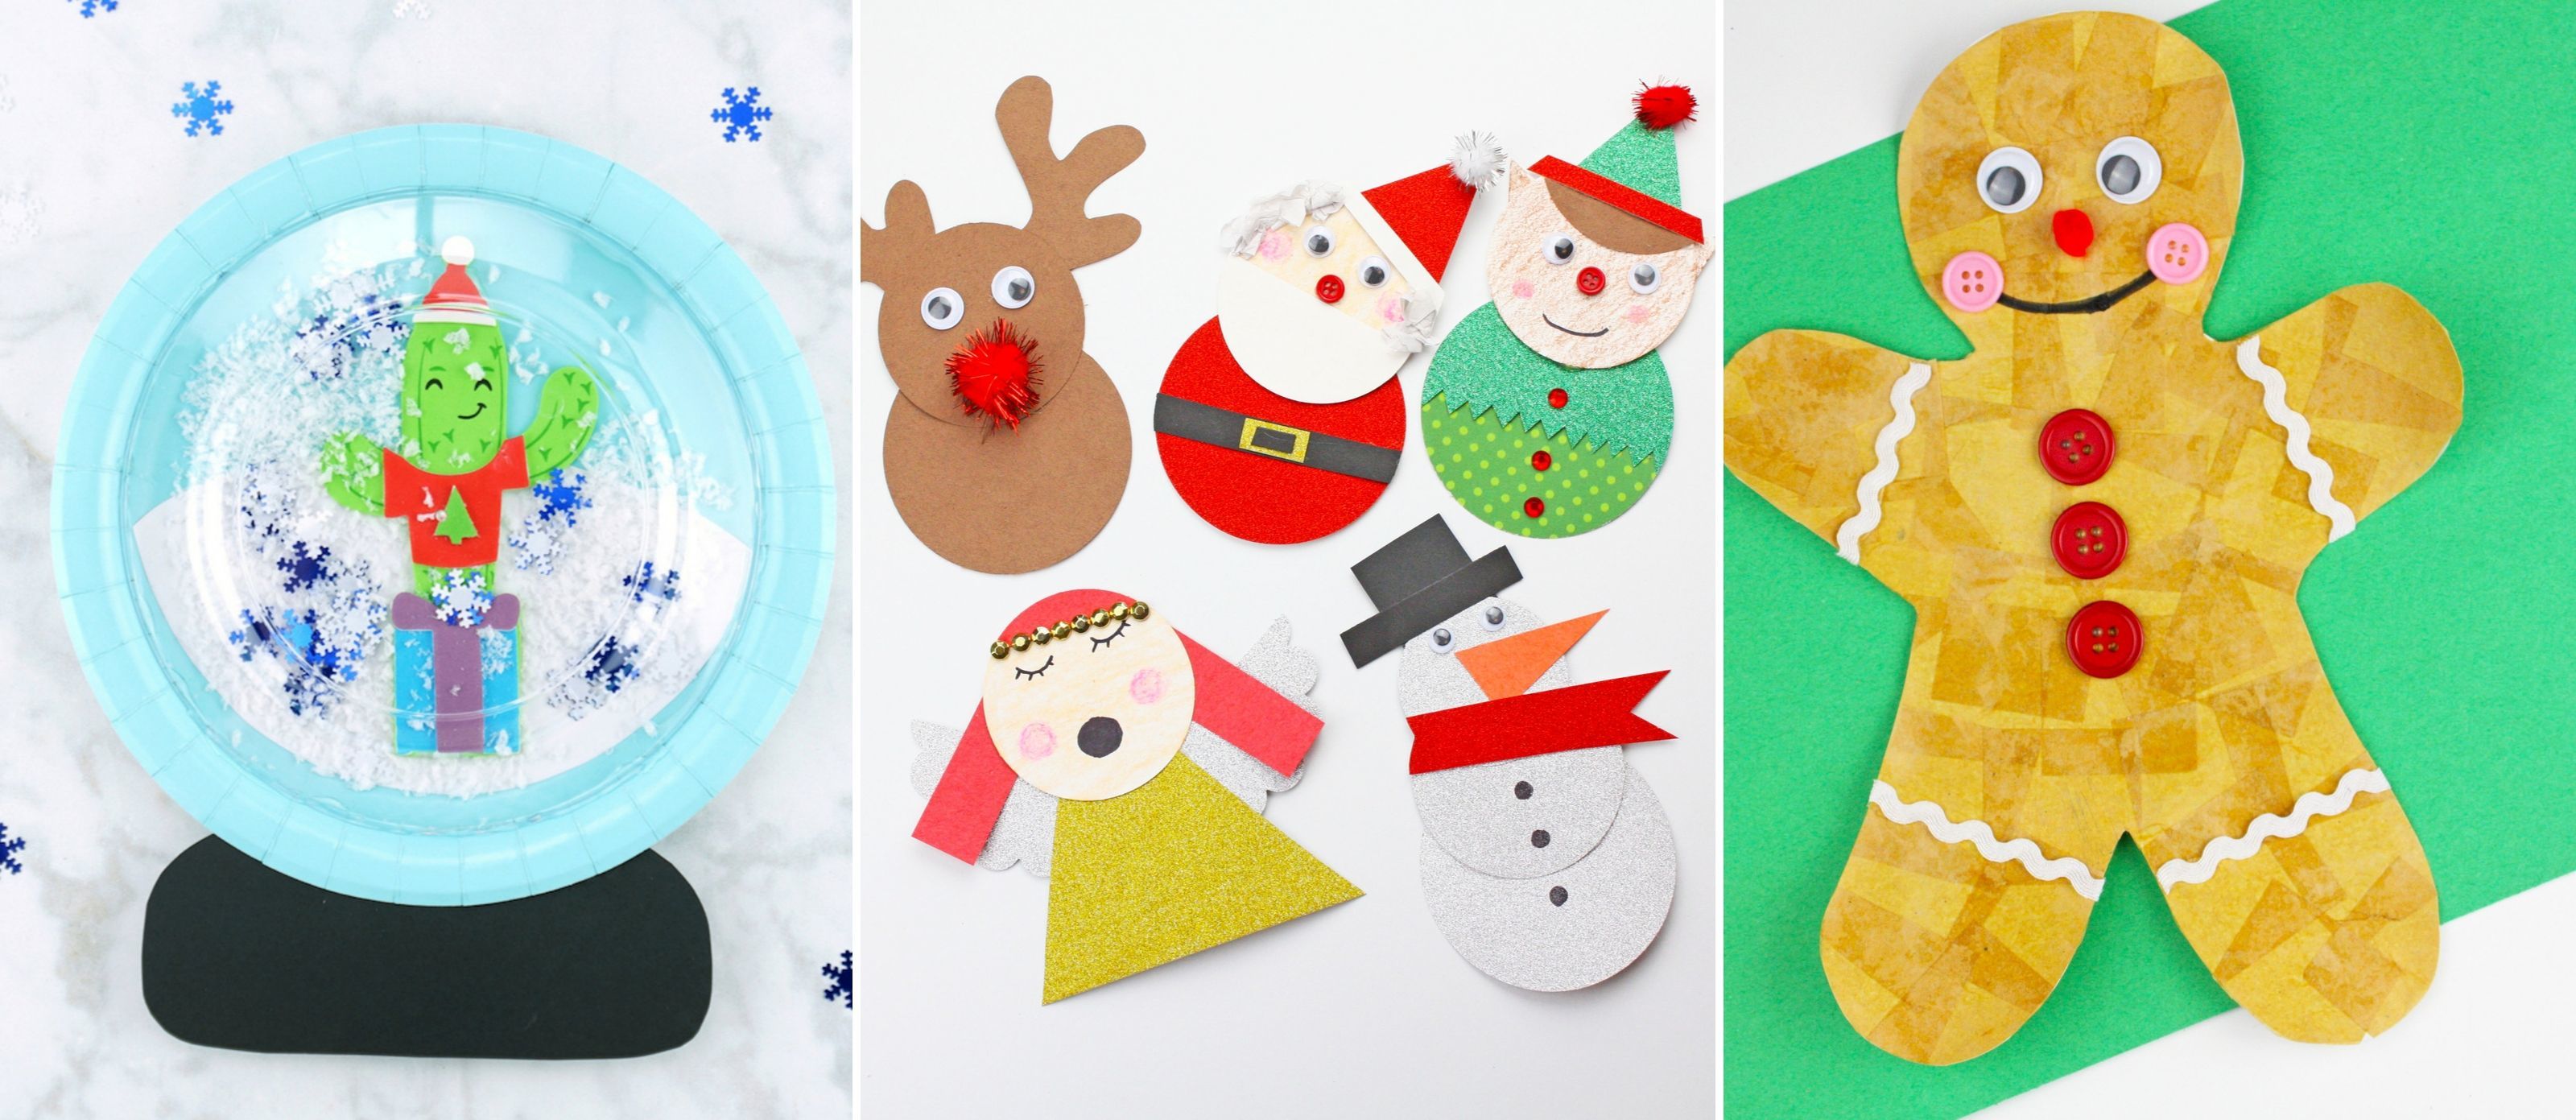 Snowflakes Suncatcher Kit Christmas Crafts Kids Craft Kit DIY